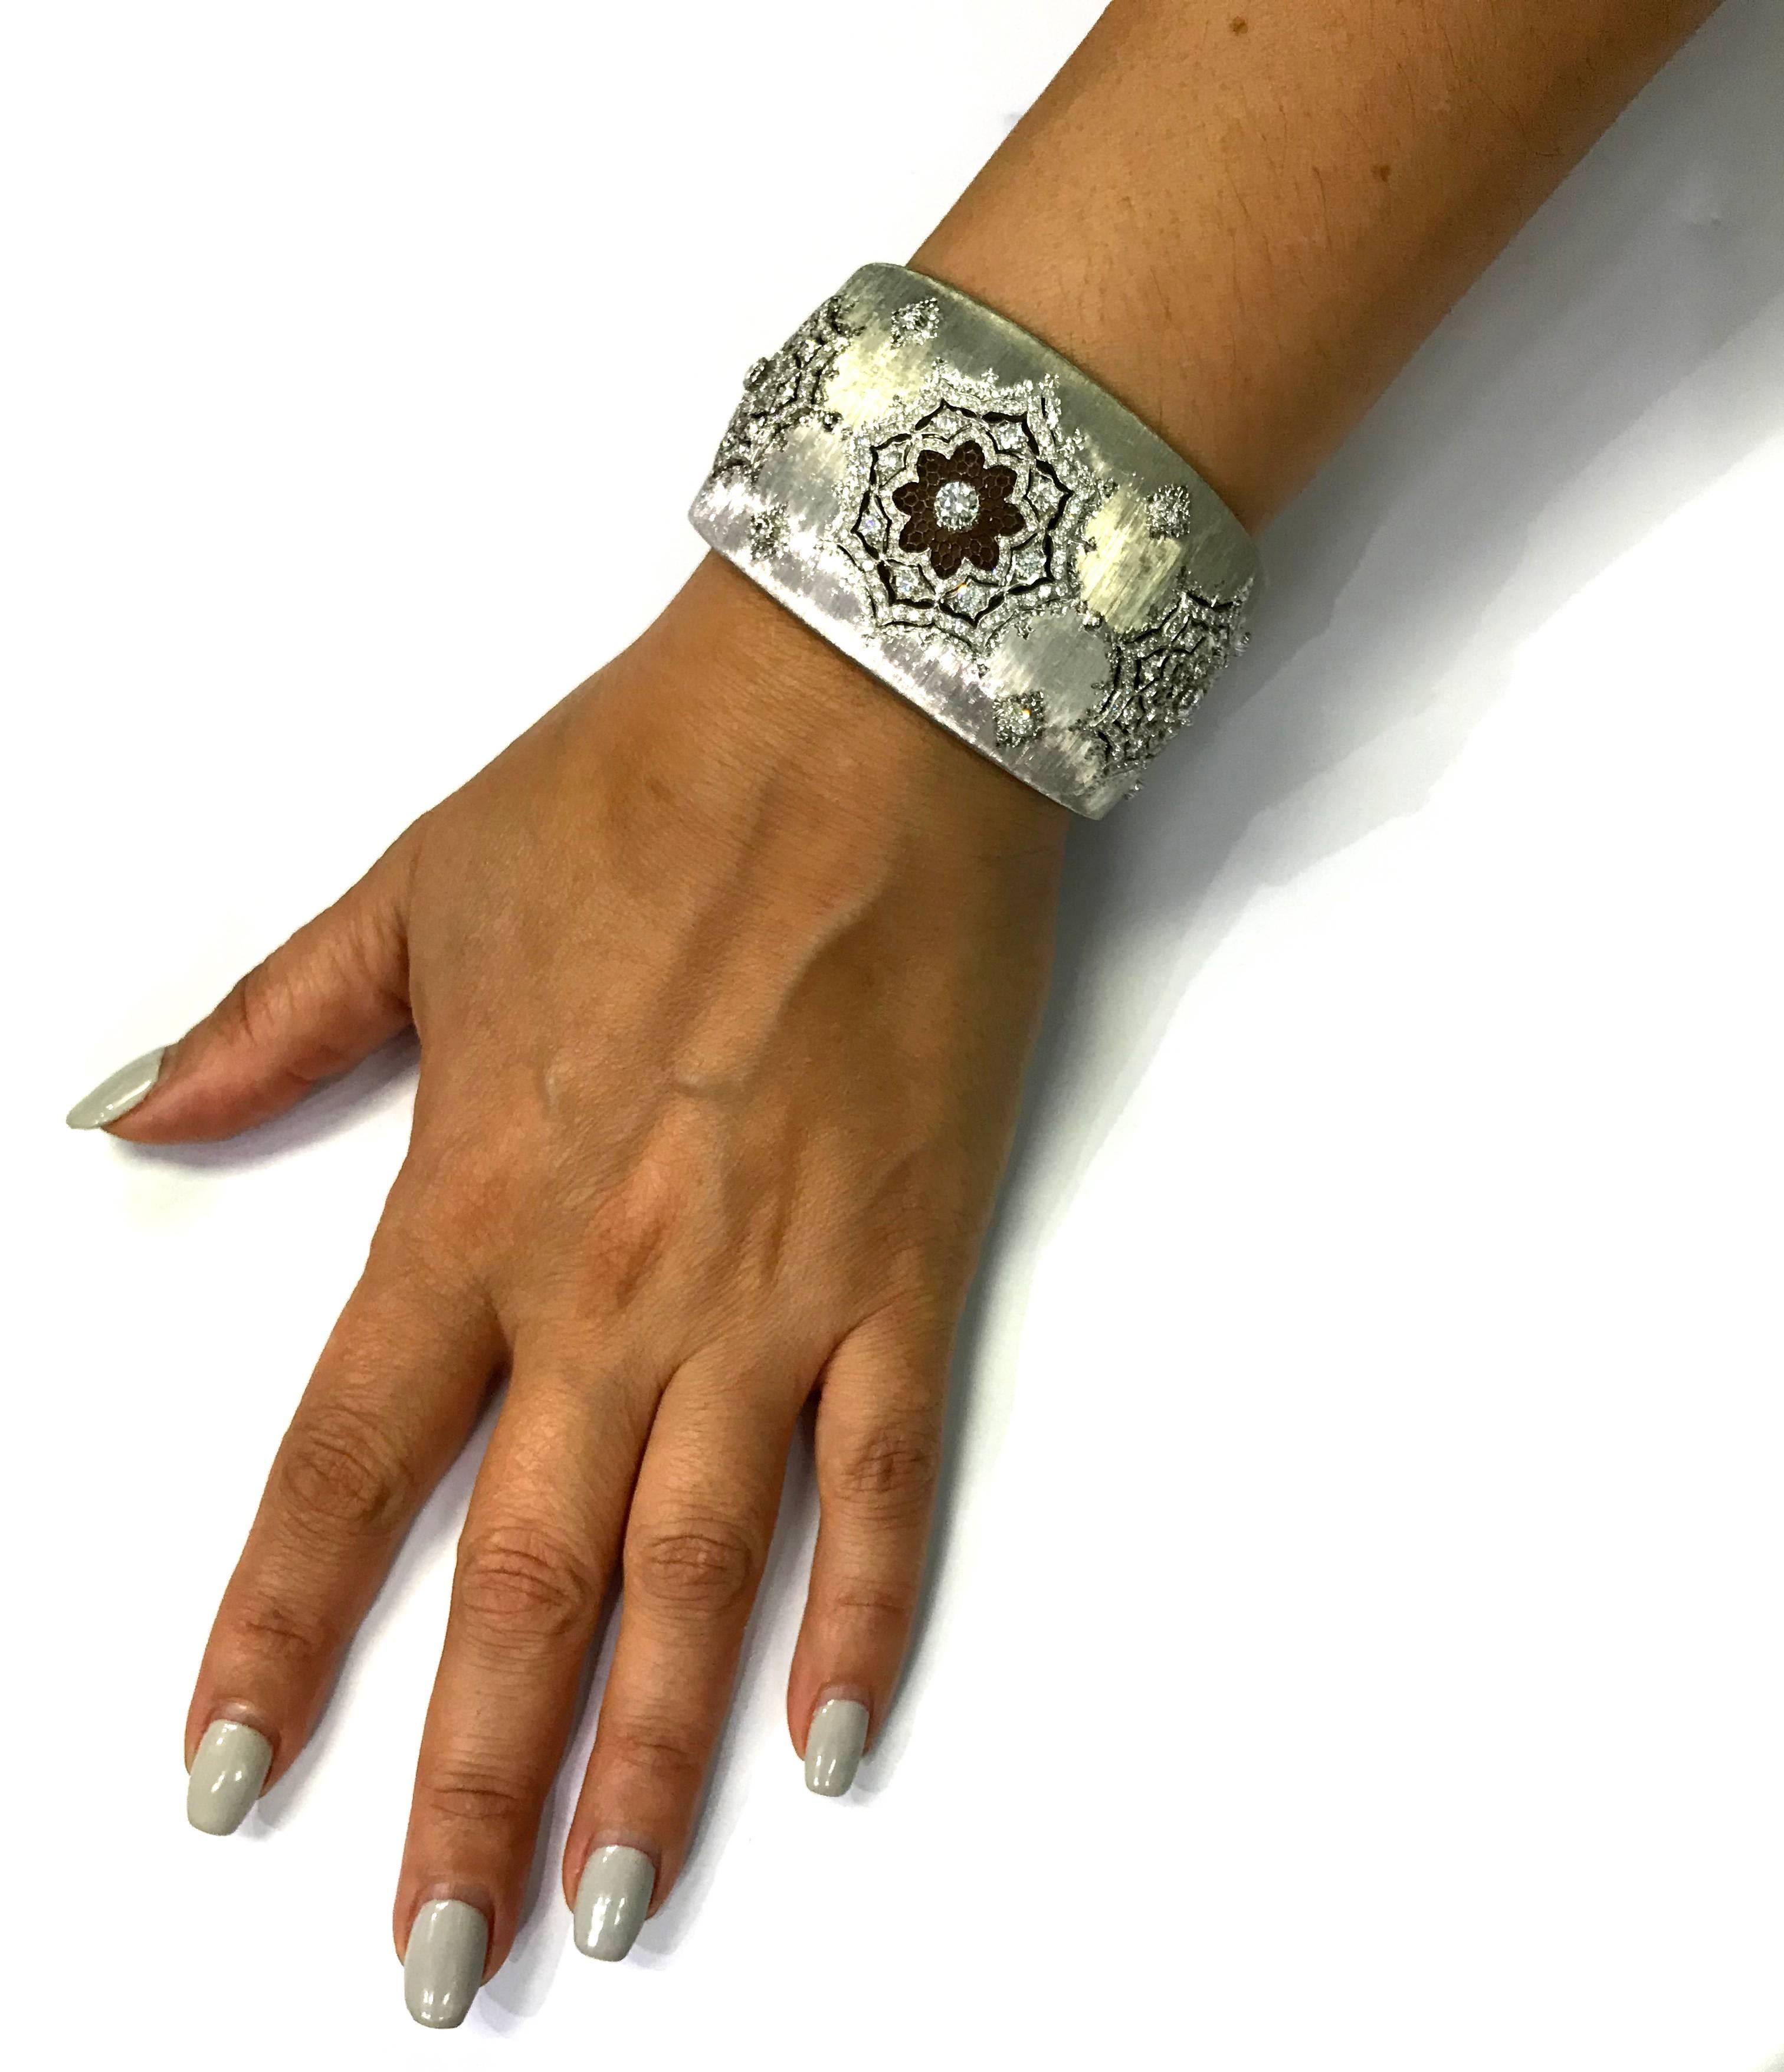 Buccellati White Gold and Diamond Cuff Bracelet

Retail Value: $125,000 shown on Buccellati website. 

18K Brushed White Gold

Wide cuff with brushed gold and open work design. 

137 Round Diamonds set. Apprx. 4.00ct.

As shown in photos, bracelet